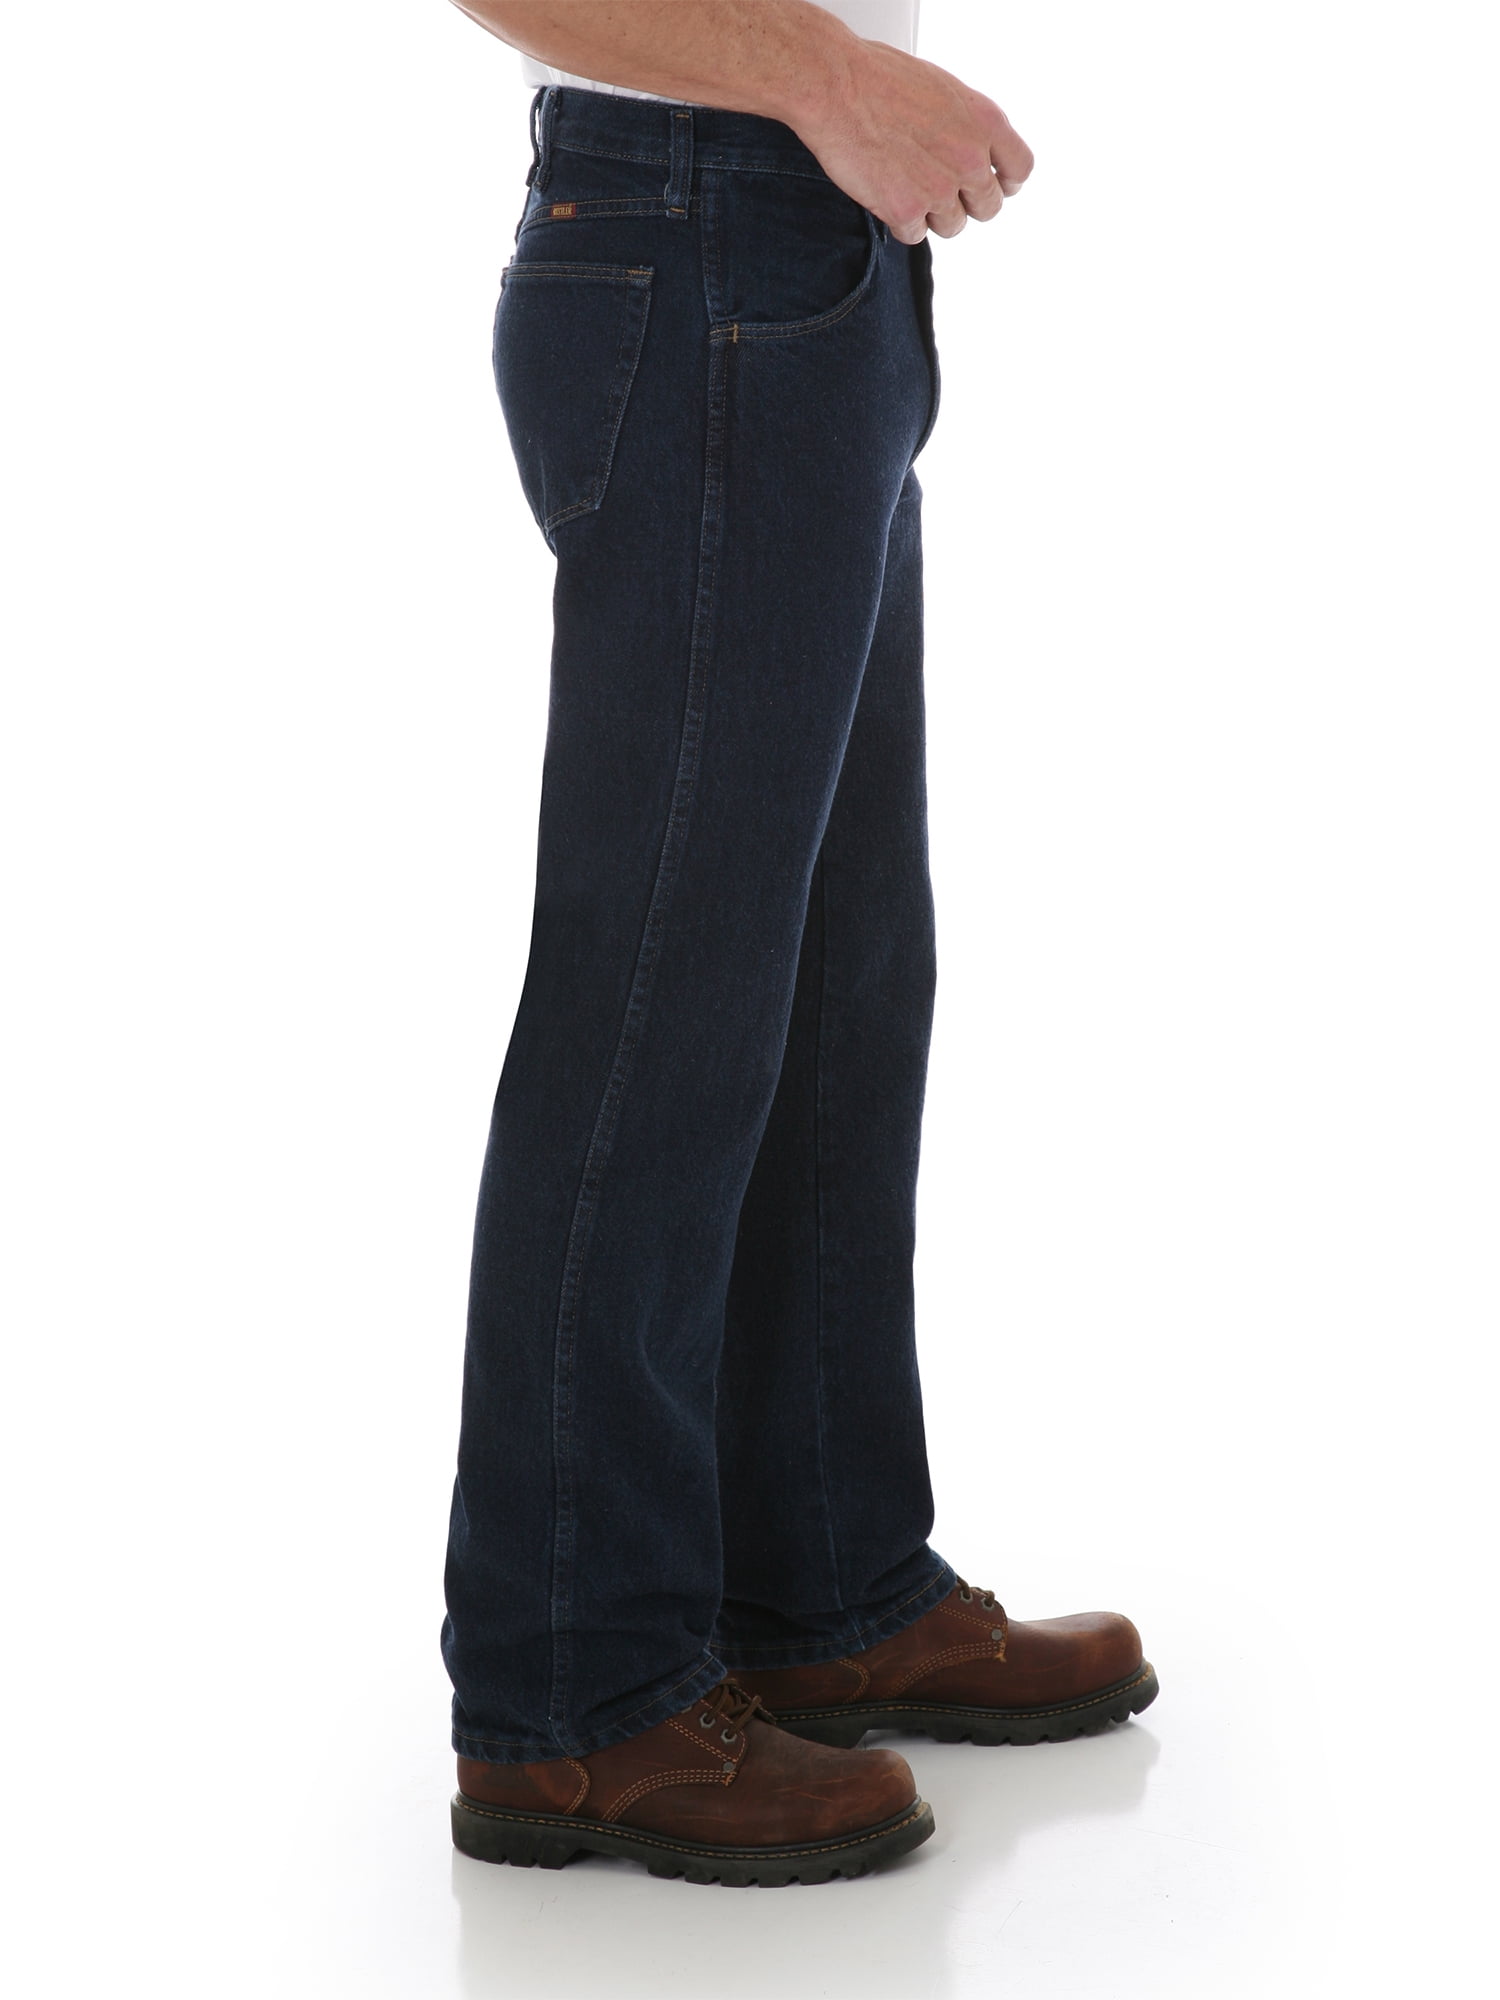 Wrangler Rustler Men's and Big Men's Regular Fit Boot Cut Cotton Jeans -  